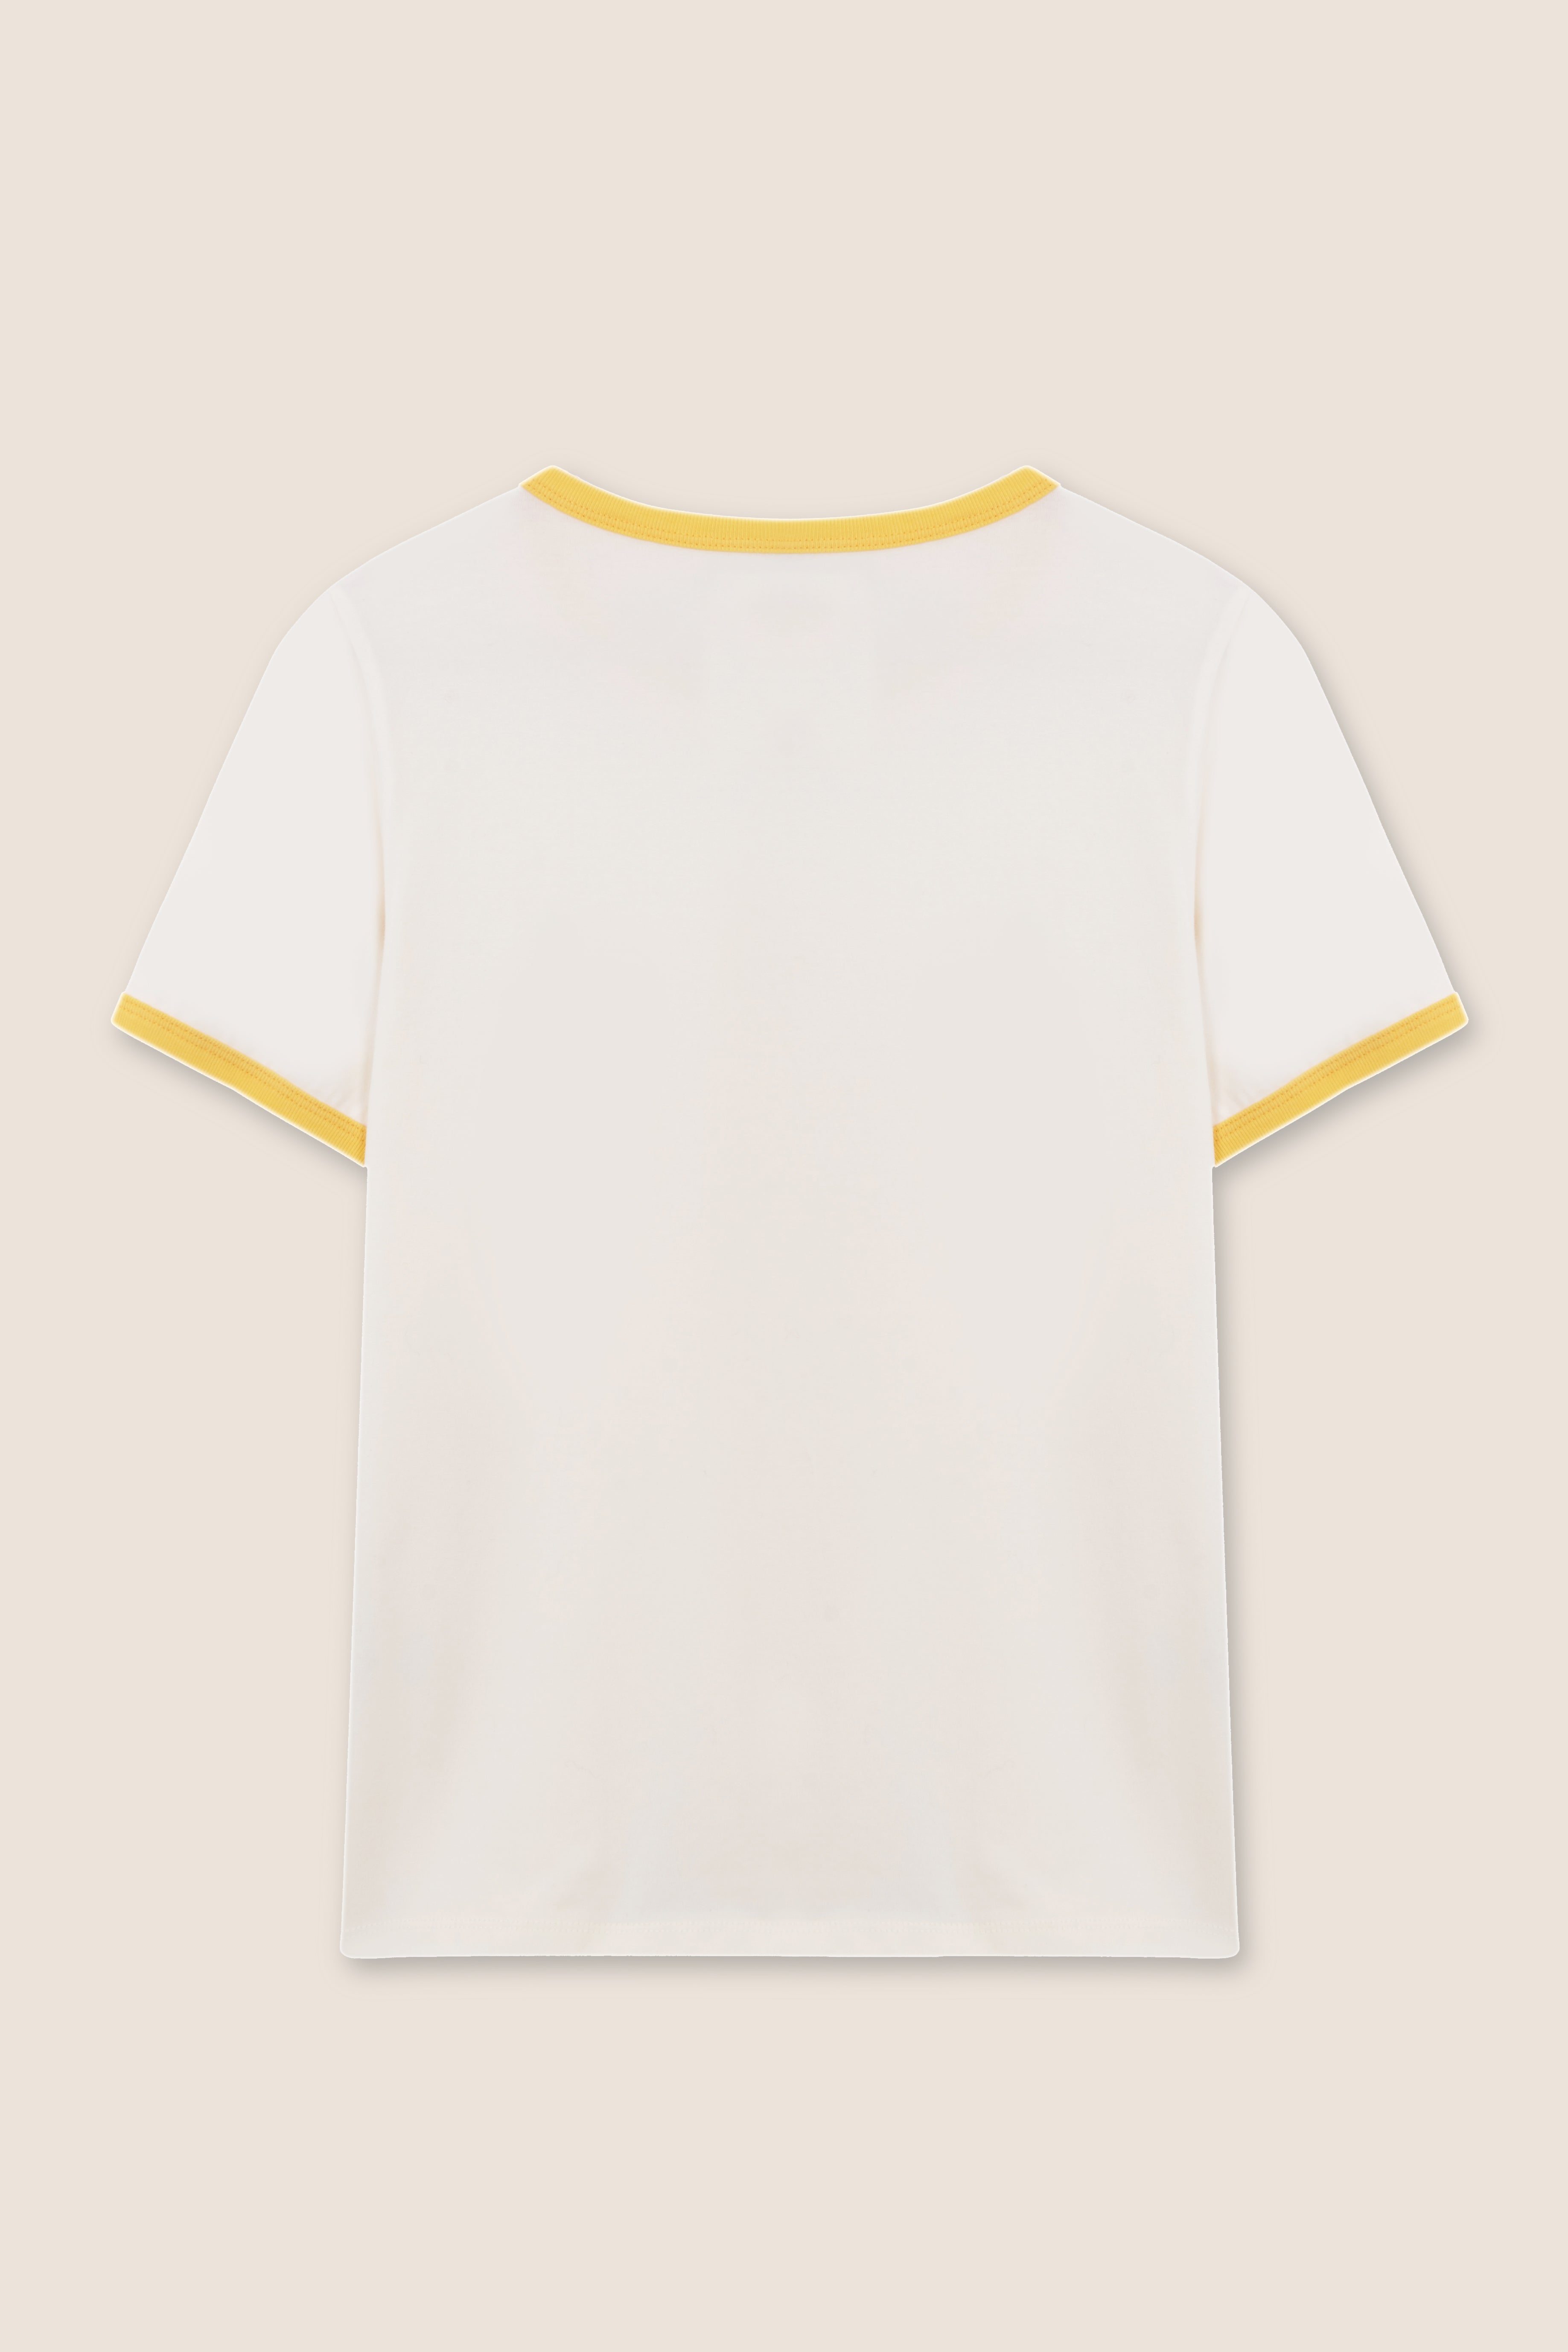 Helbig Club Yellow T-shirt